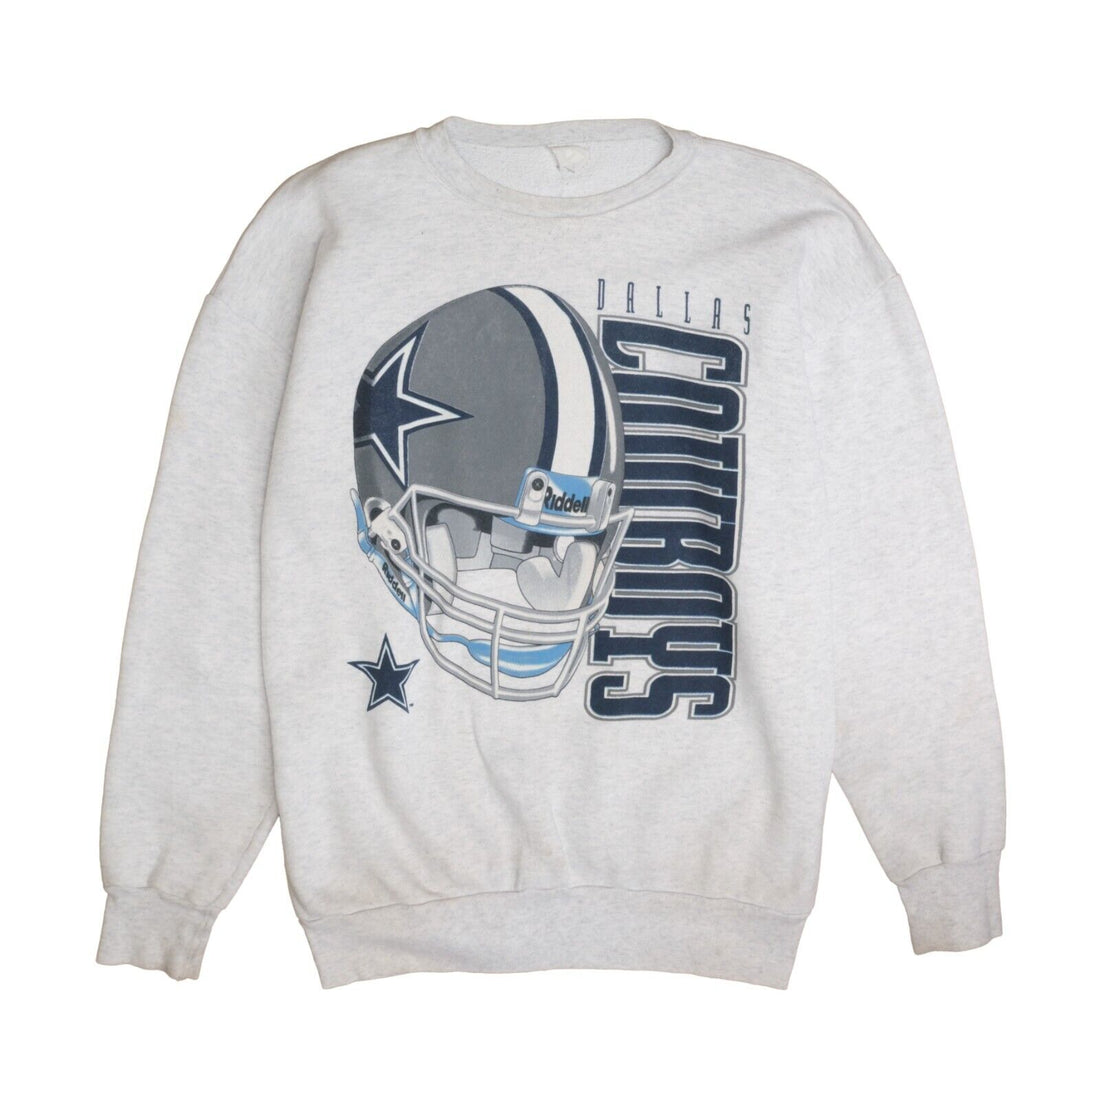 Vintage Dallas Cowboys Helmet Sweatshirt Crewneck Size Large 90s NFL